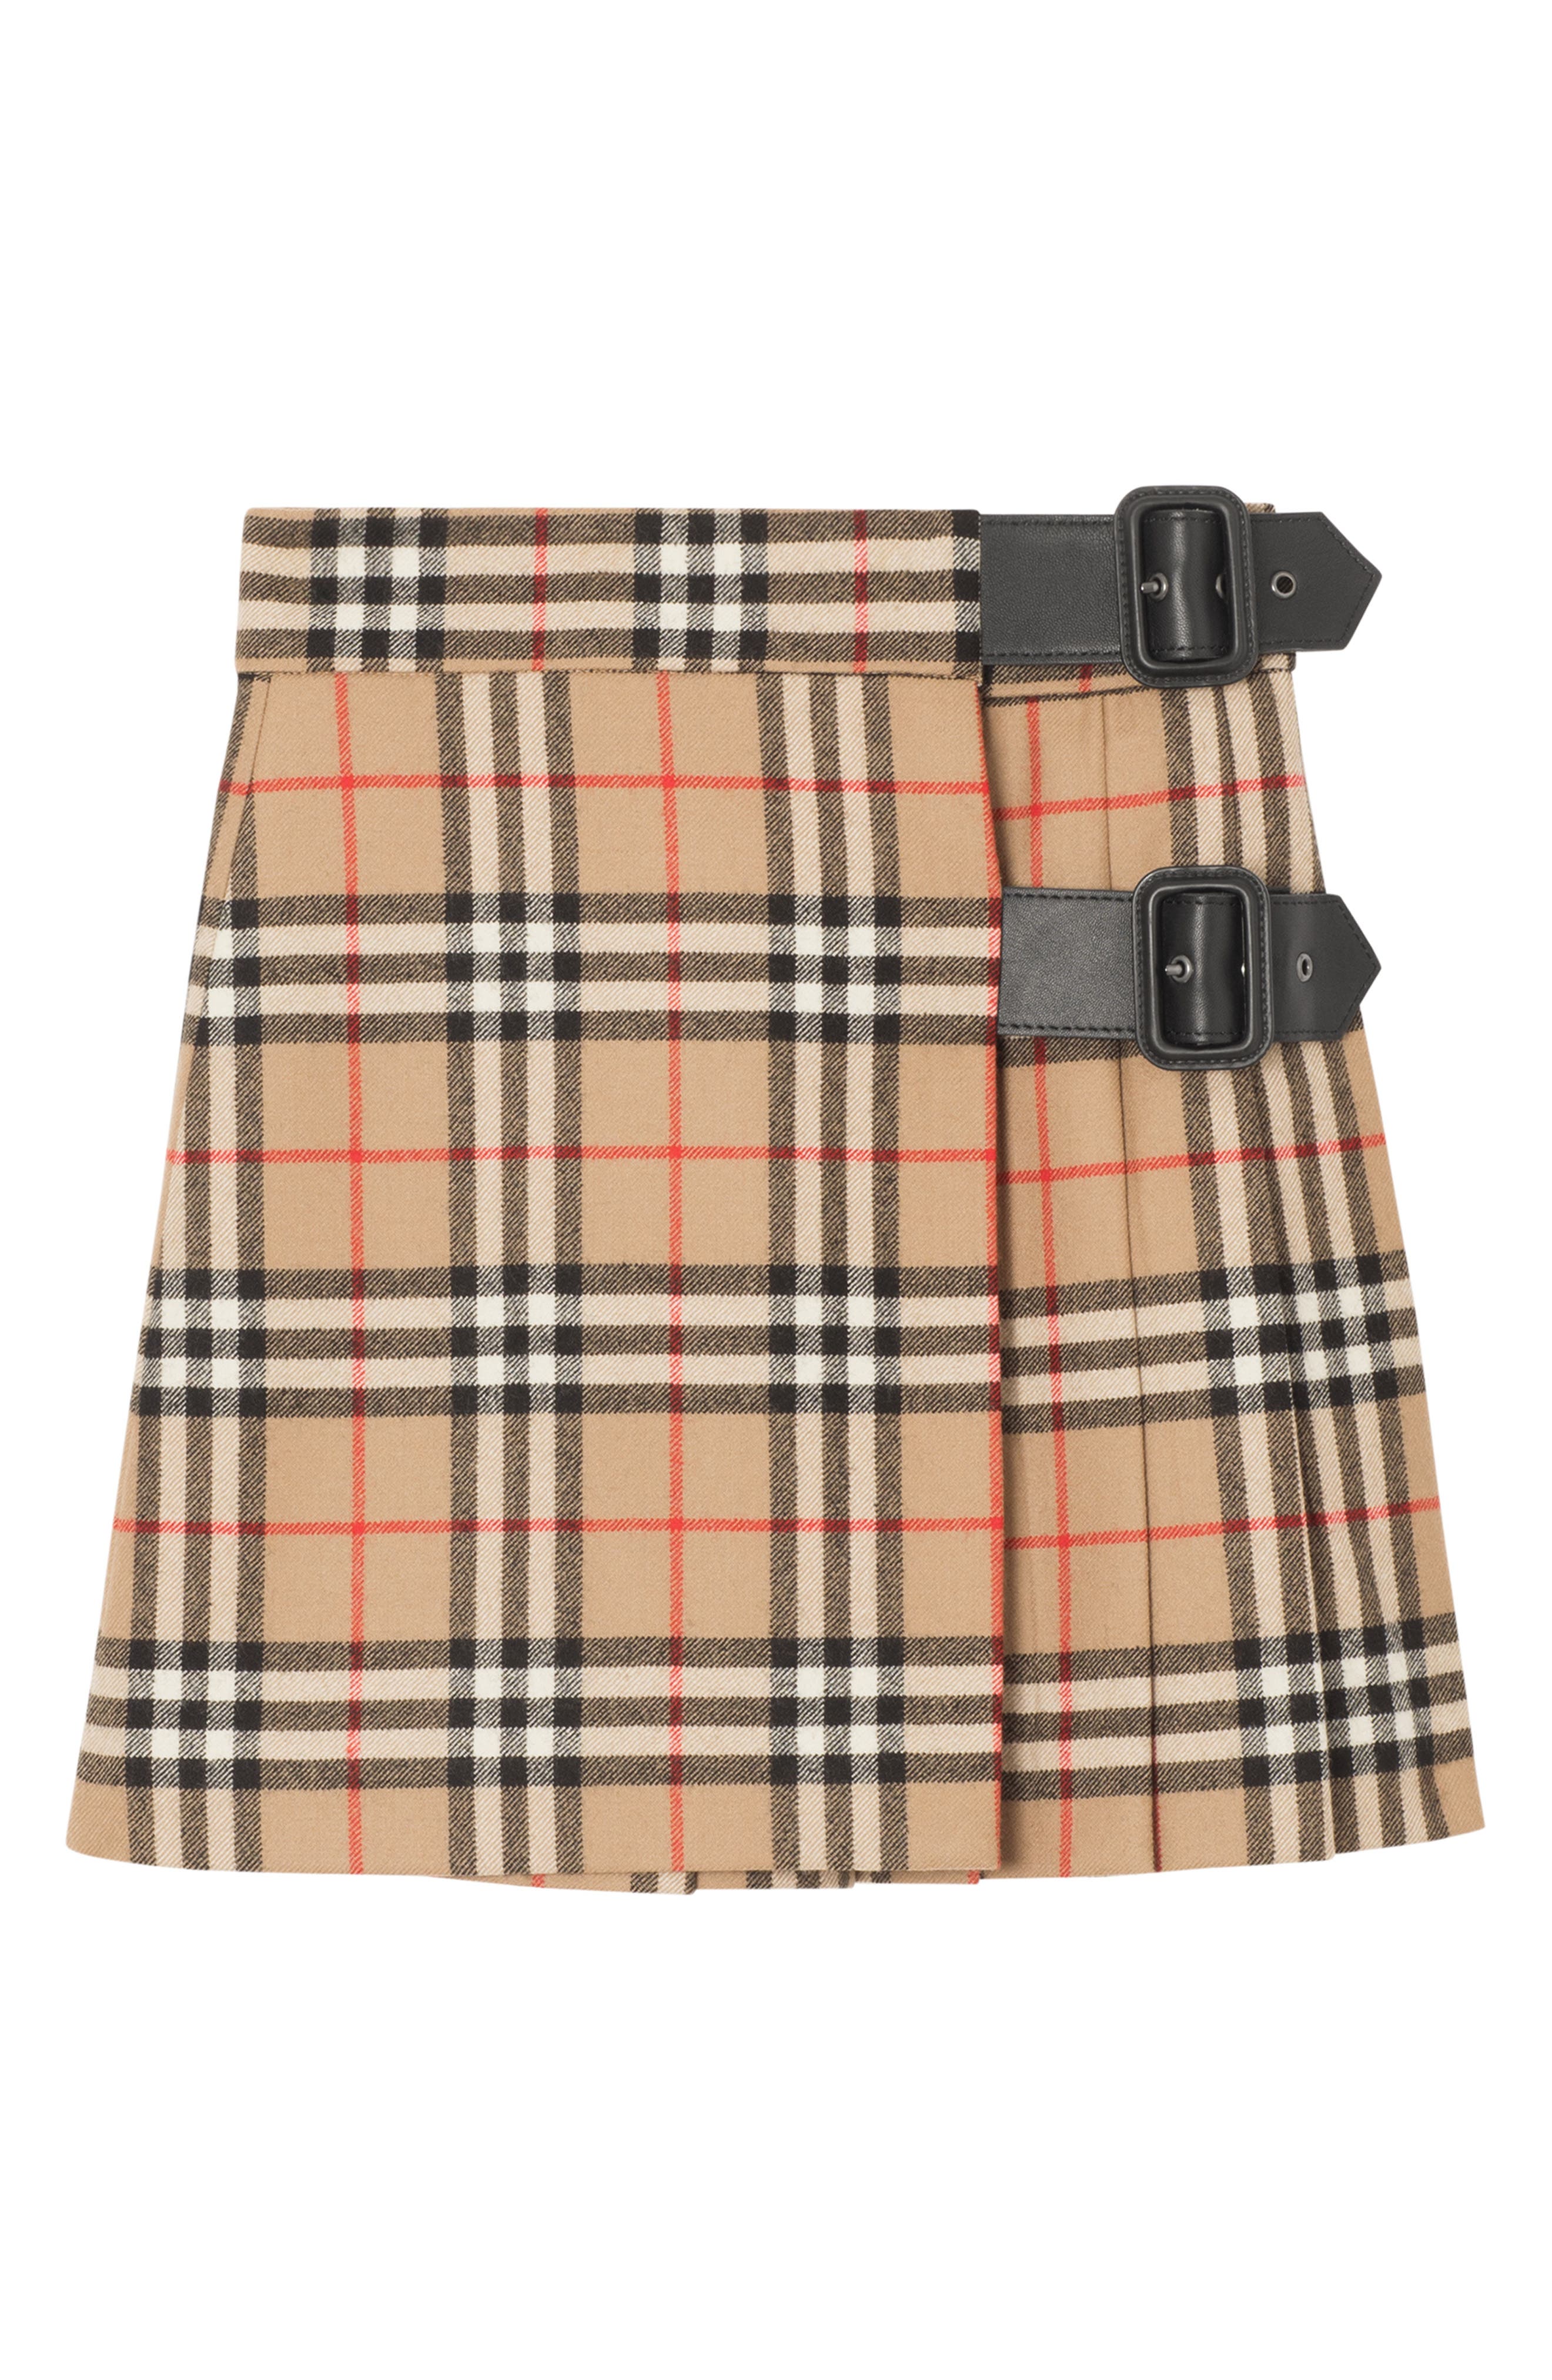 burberry pattern skirt